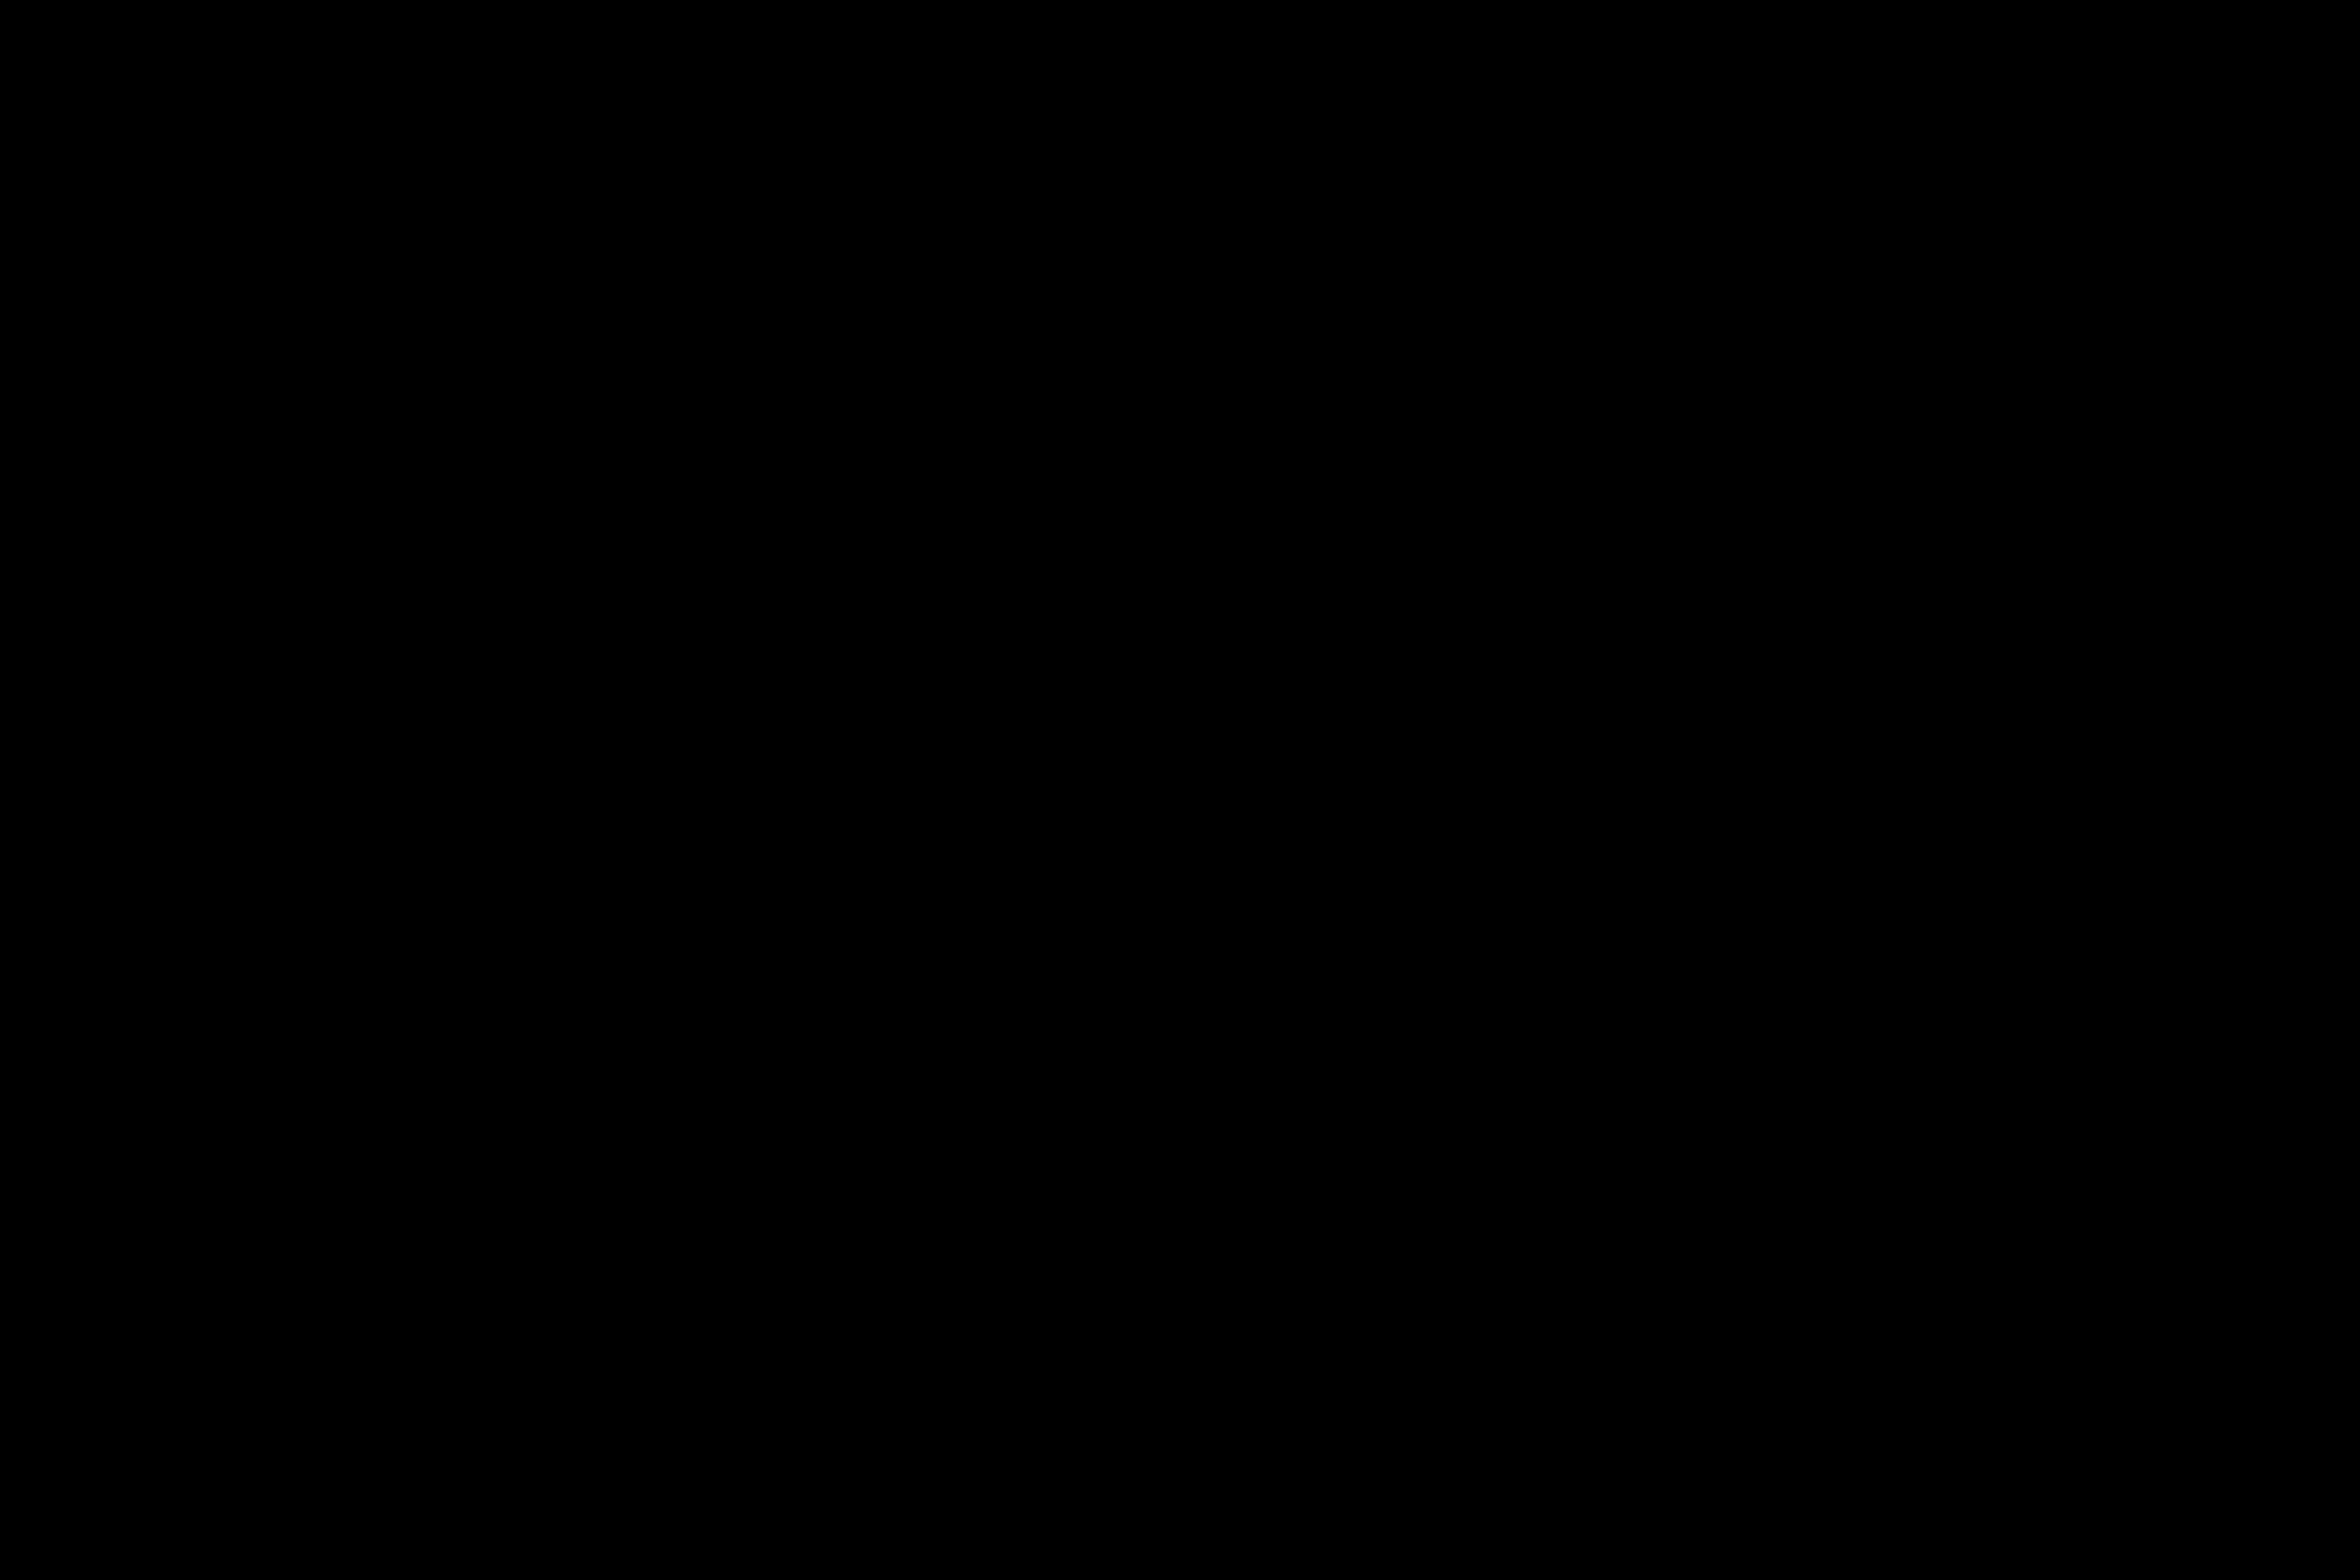 An all-black screenshot showing a YouTube video playing a blank screen.